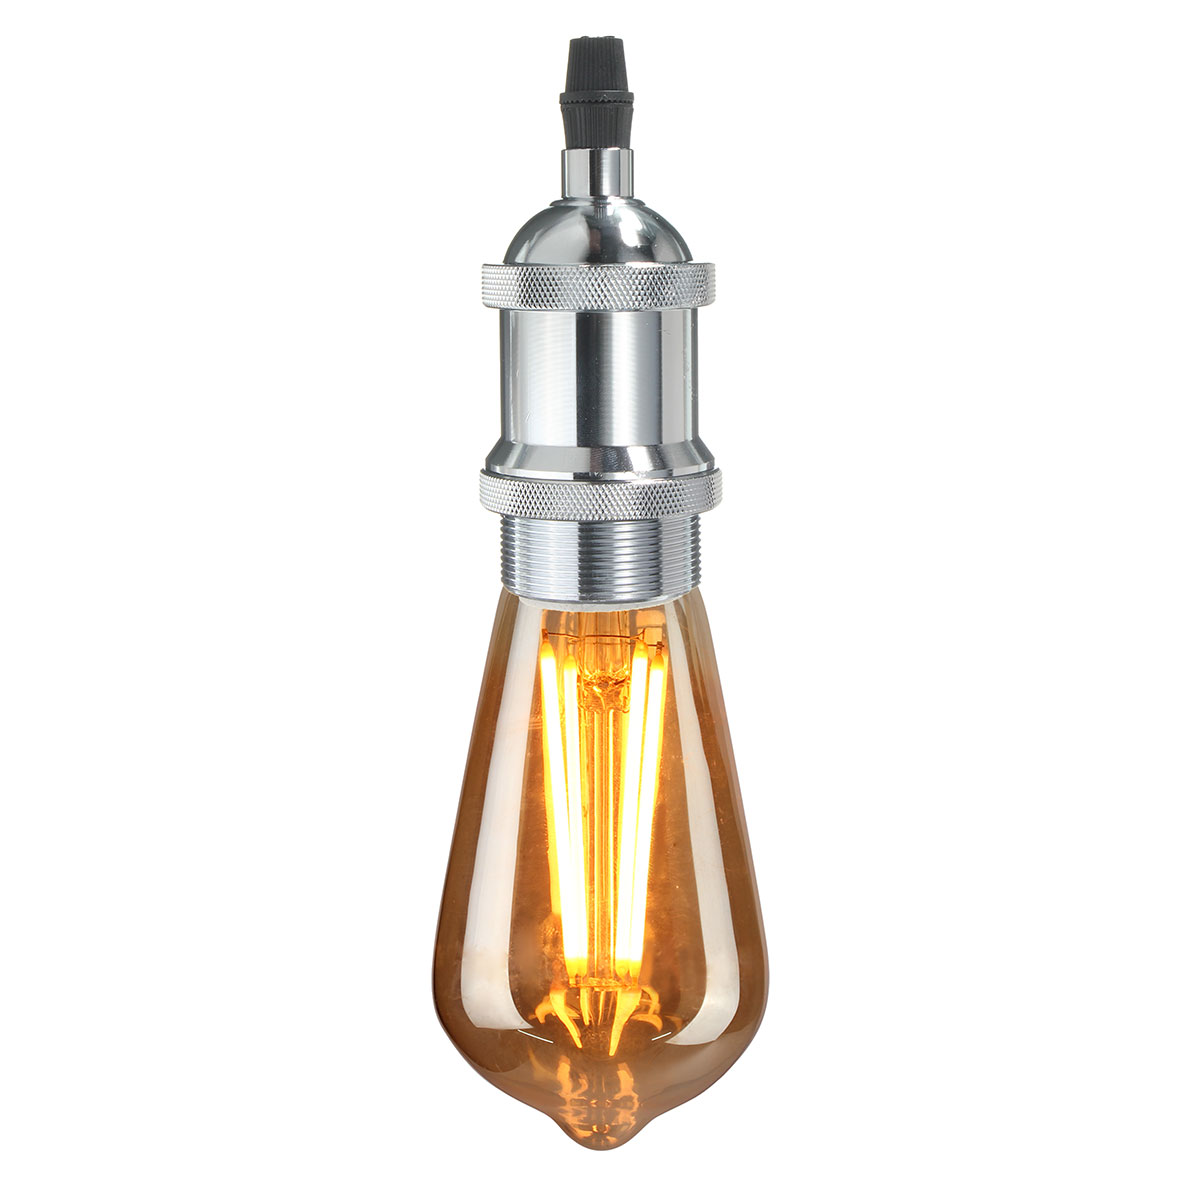 Find 110V 220V E26/E27 Bulb Adapter Copper Light Vintage Holder Retro Lamp Socket for E27 Light Bulb for Sale on Gipsybee.com with cryptocurrencies